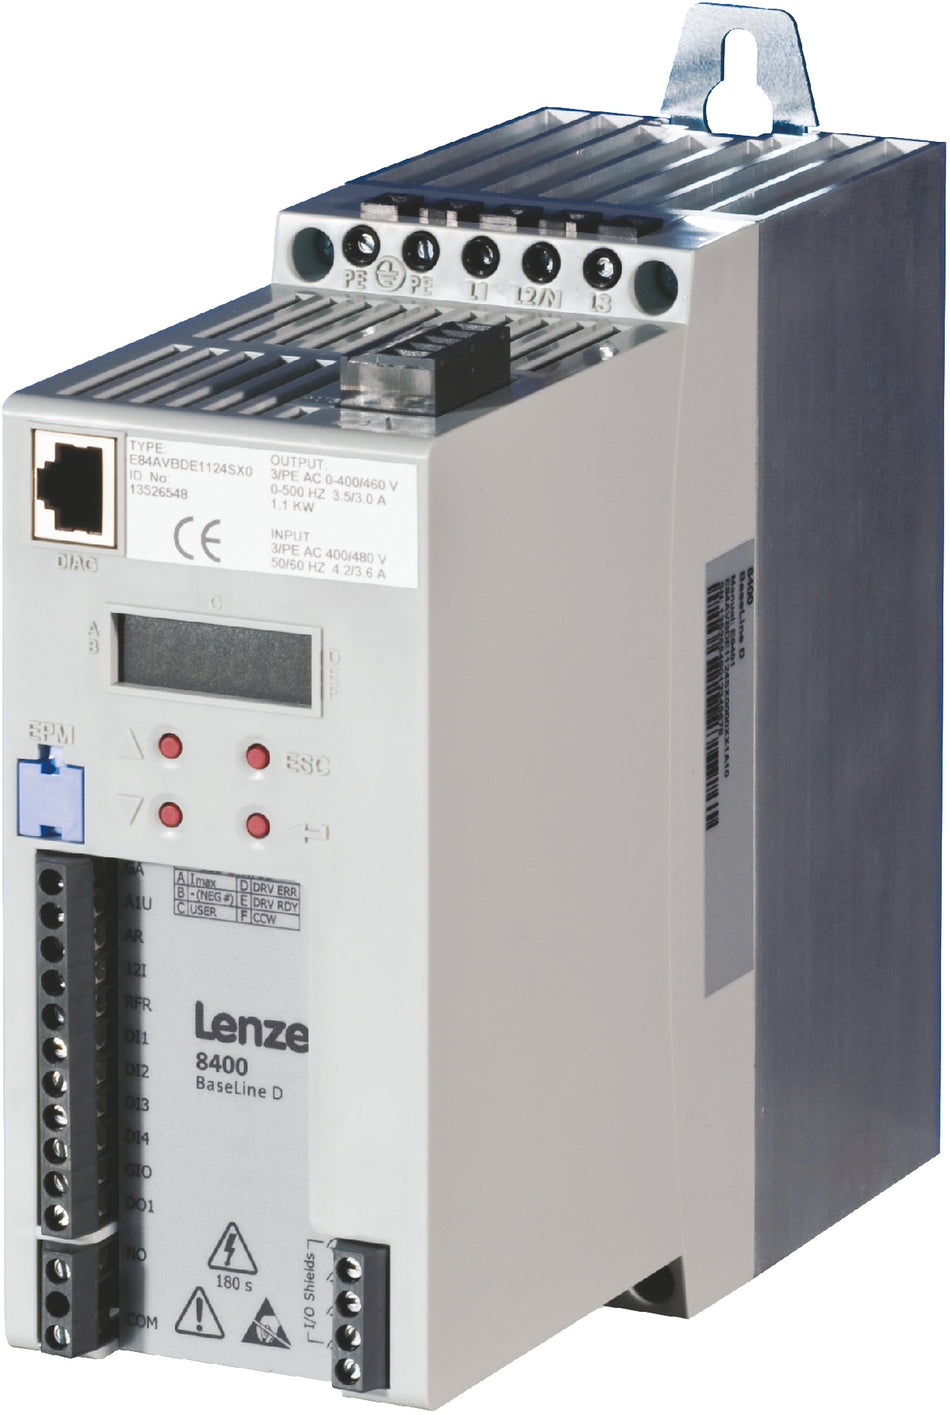 Lenze Inverter Drives 8400 BaseLine - E84AVBCE5512SX0XX3A34 0.55 kW